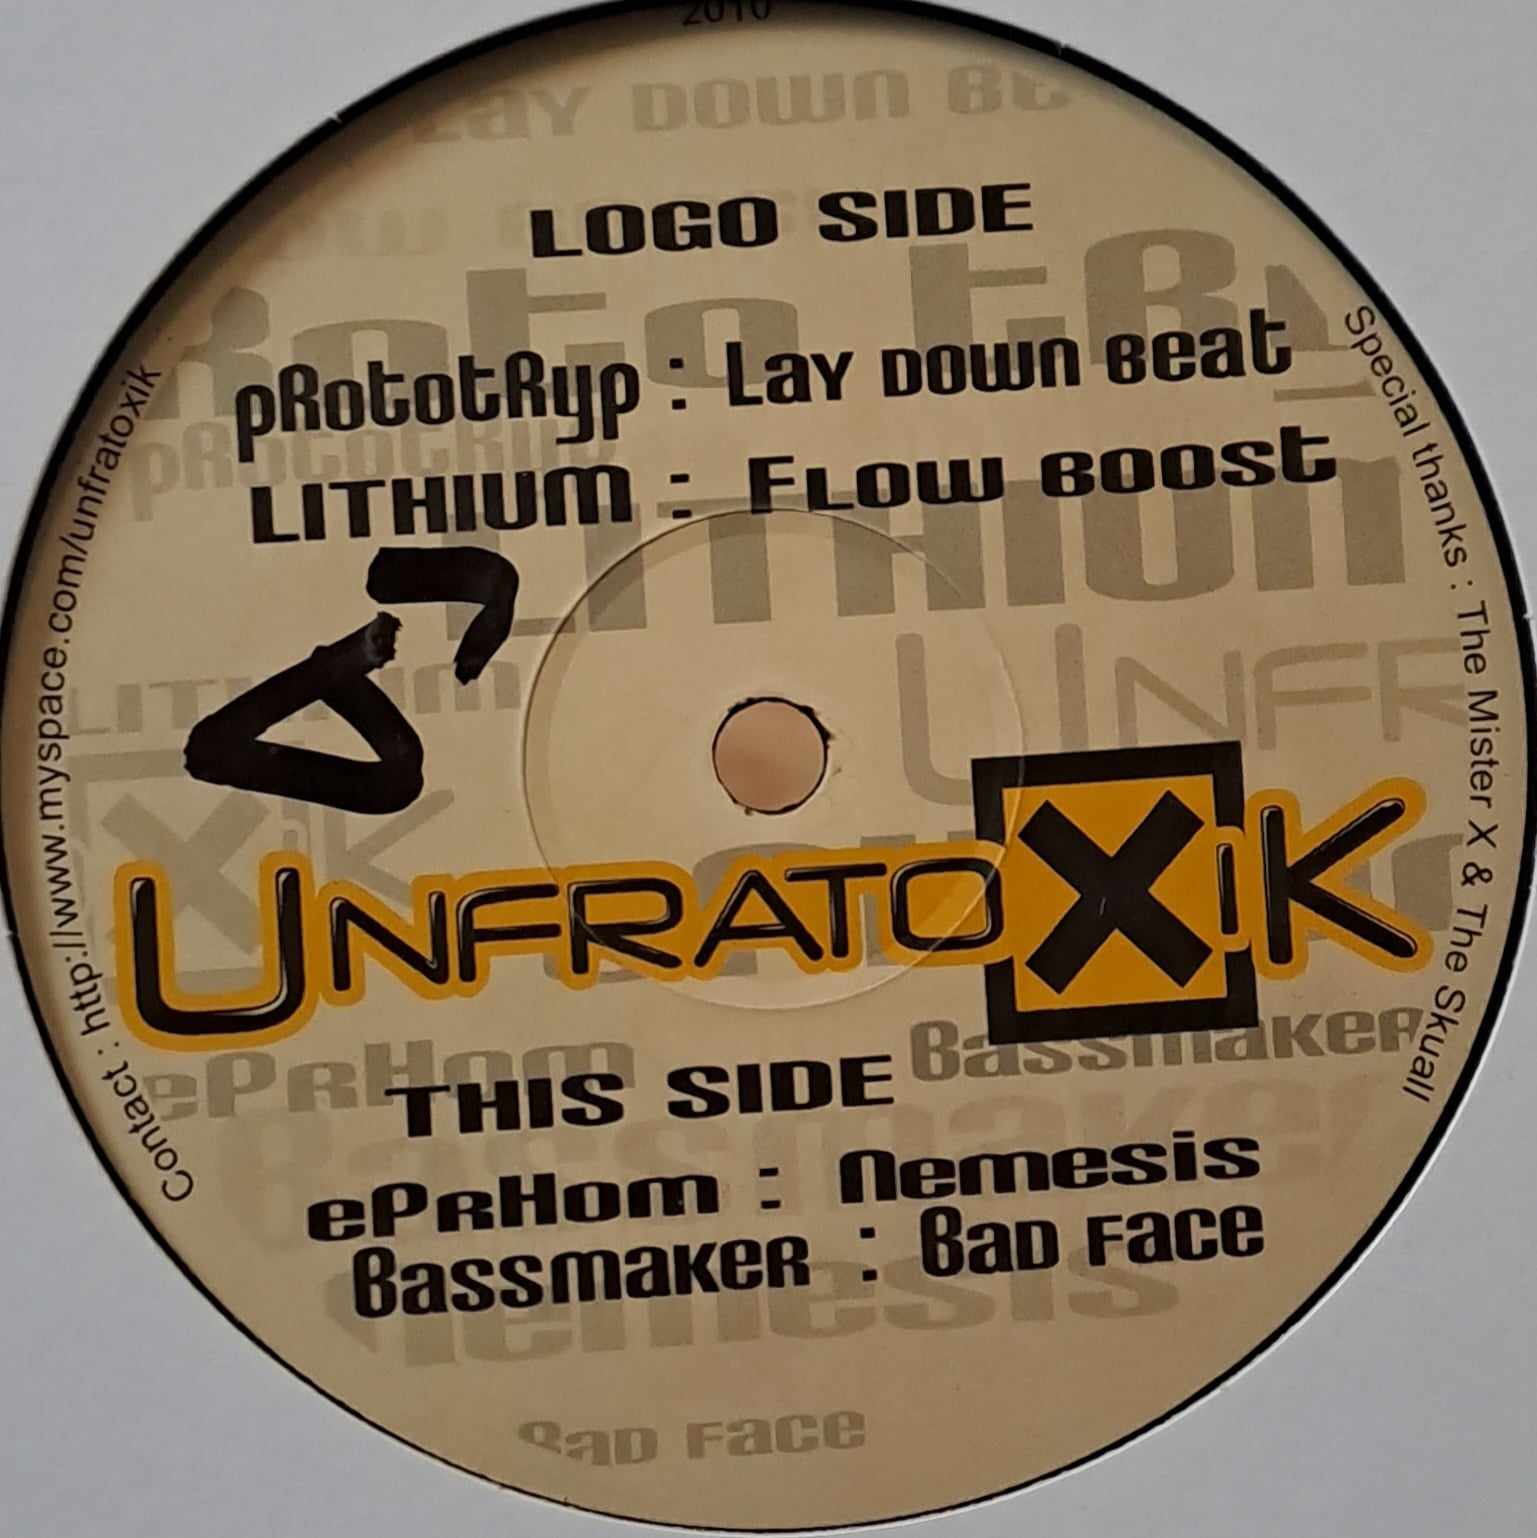 Unfratoxik 01 - vinyle freetekno